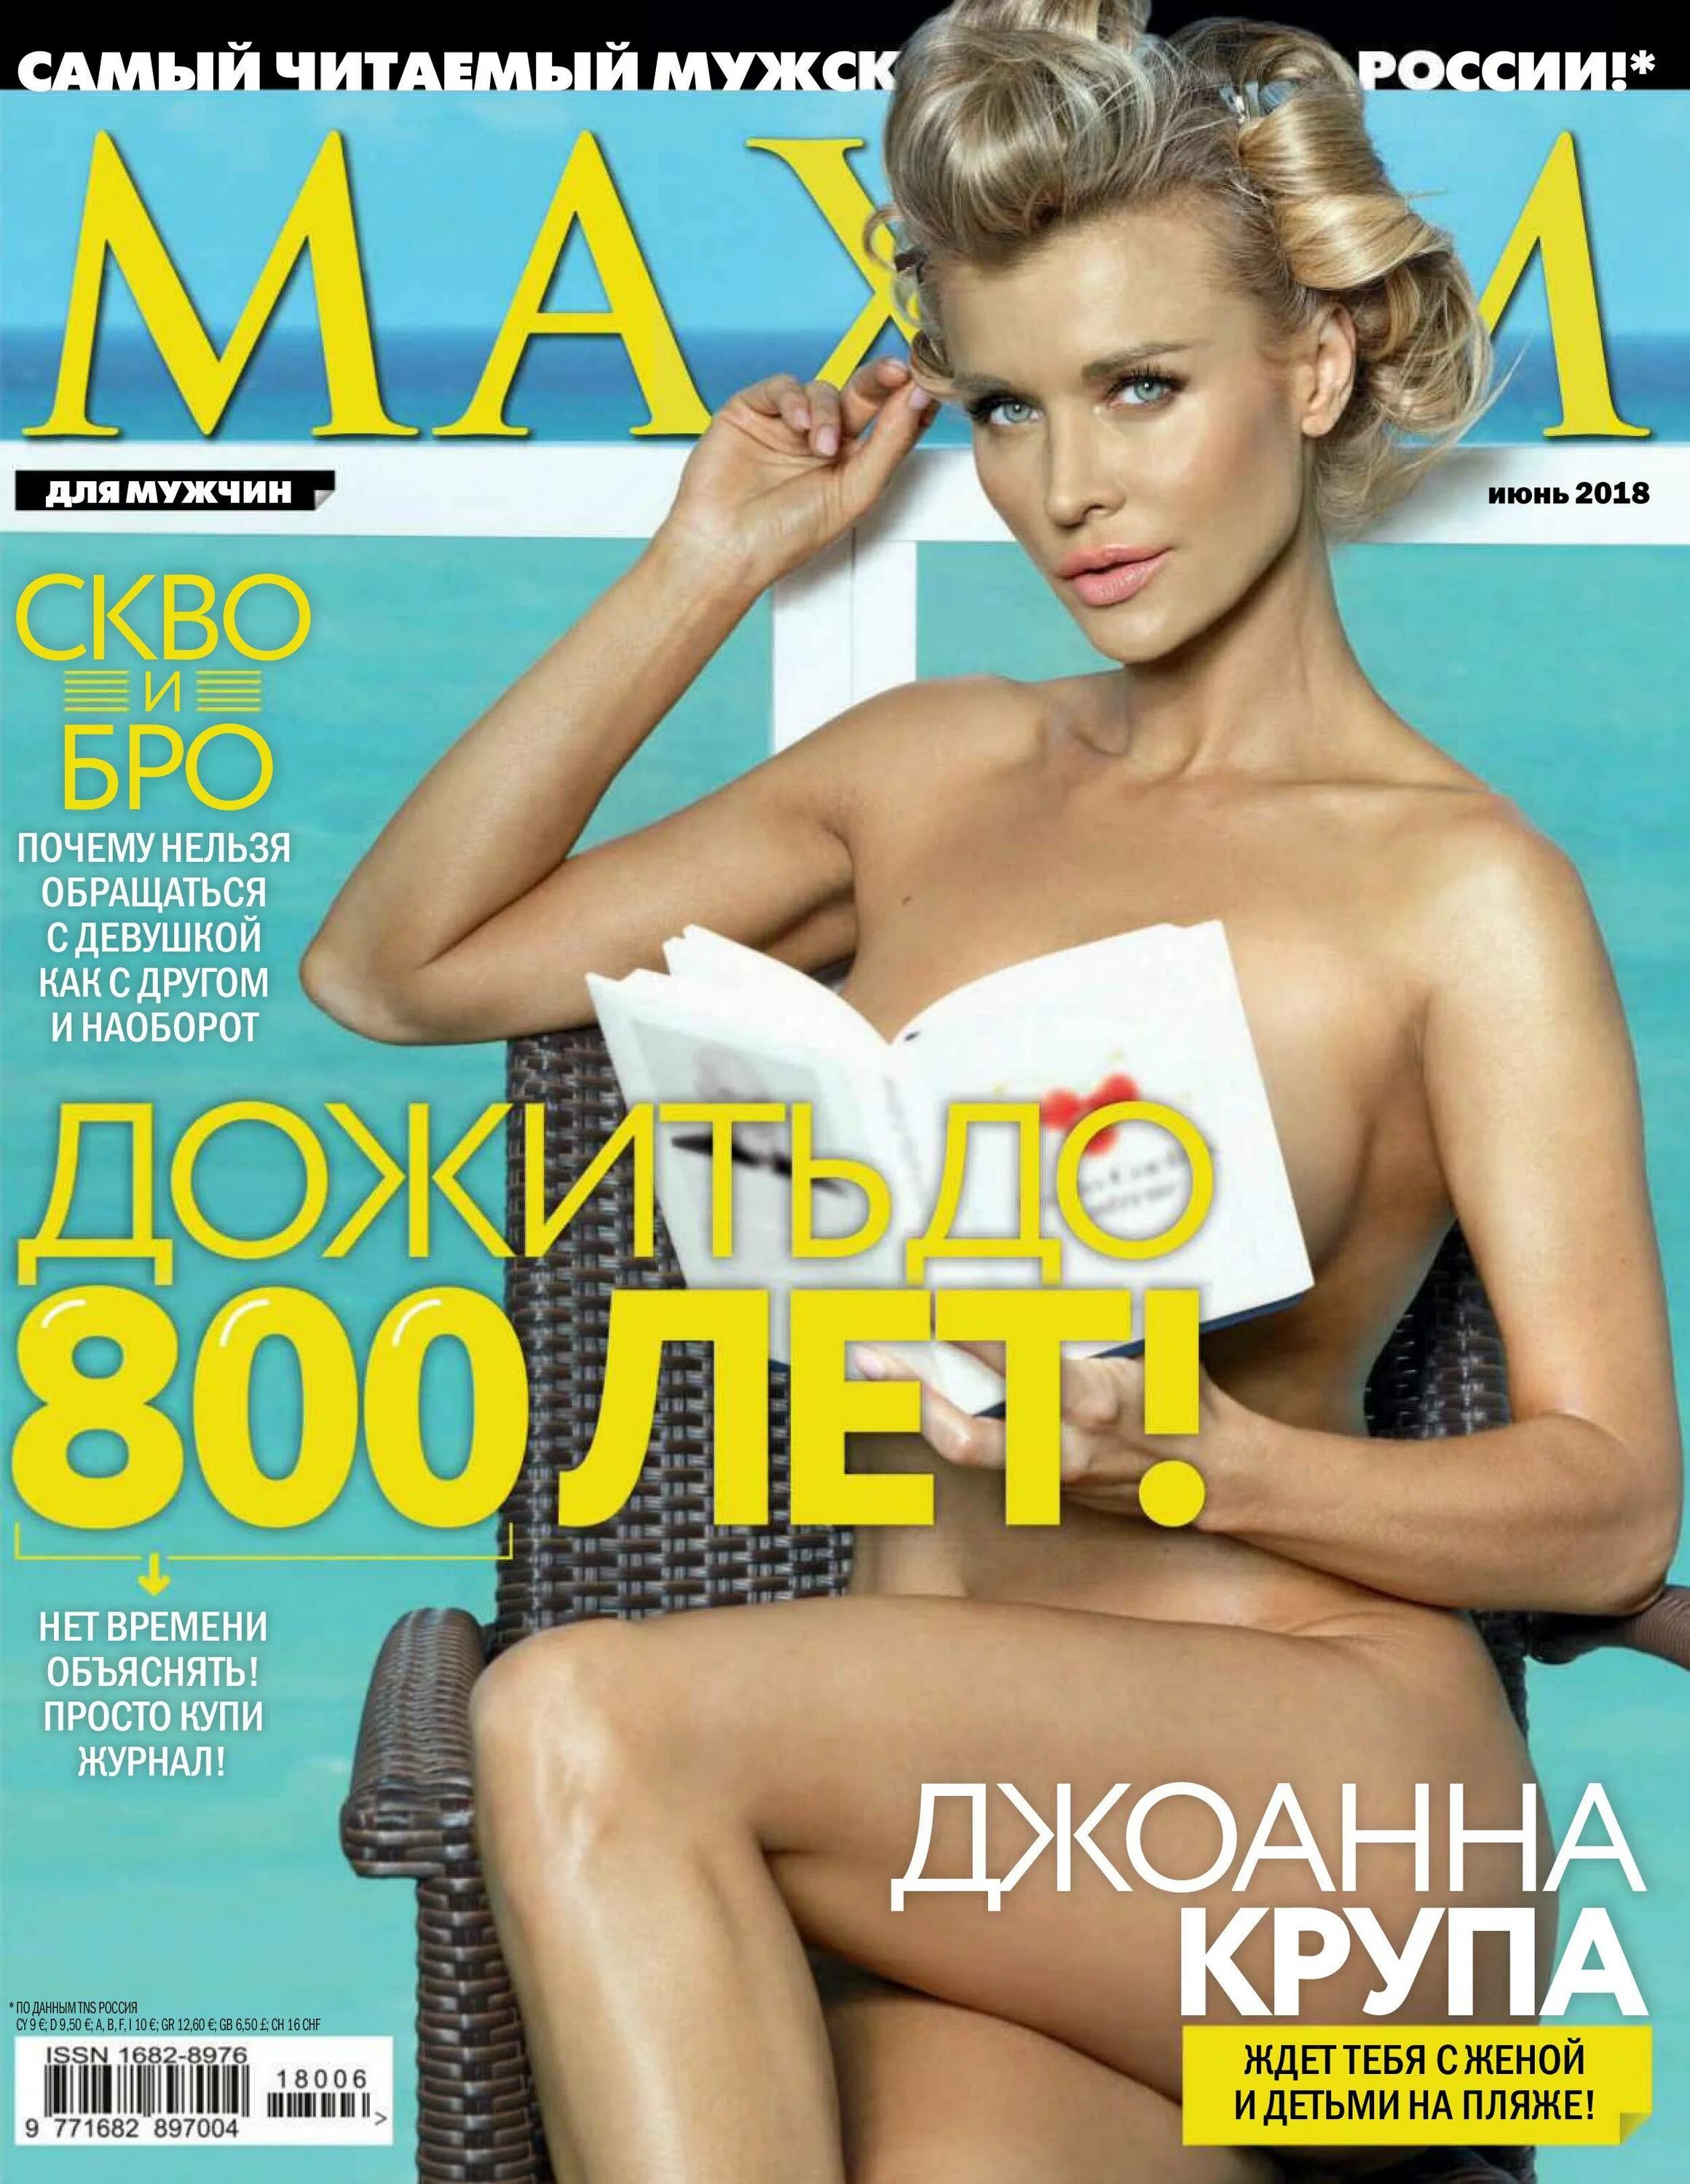 Maksim журнал. Джоанна крупа Maxim Russia. Джоанна крупа Maxim Россия.